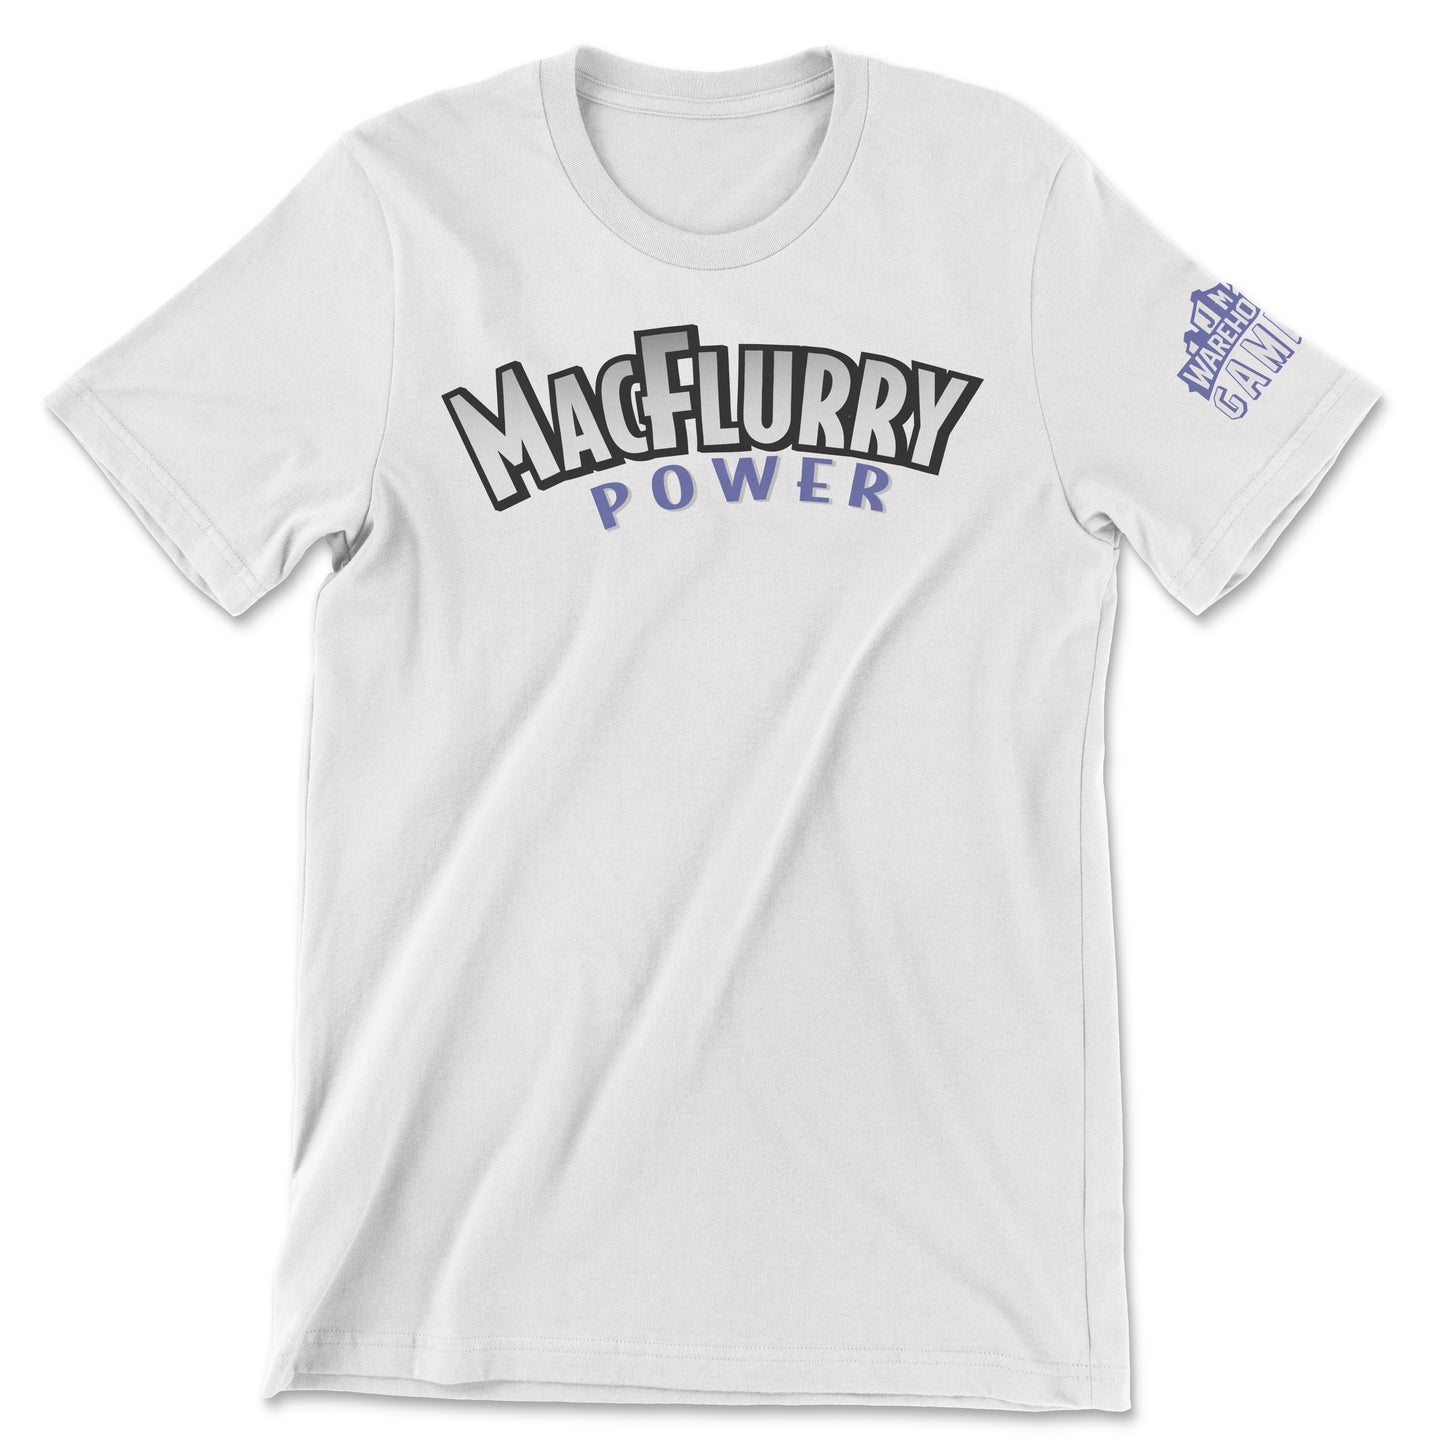 MacFlurry Power | Blitzball 3 T-Shirt